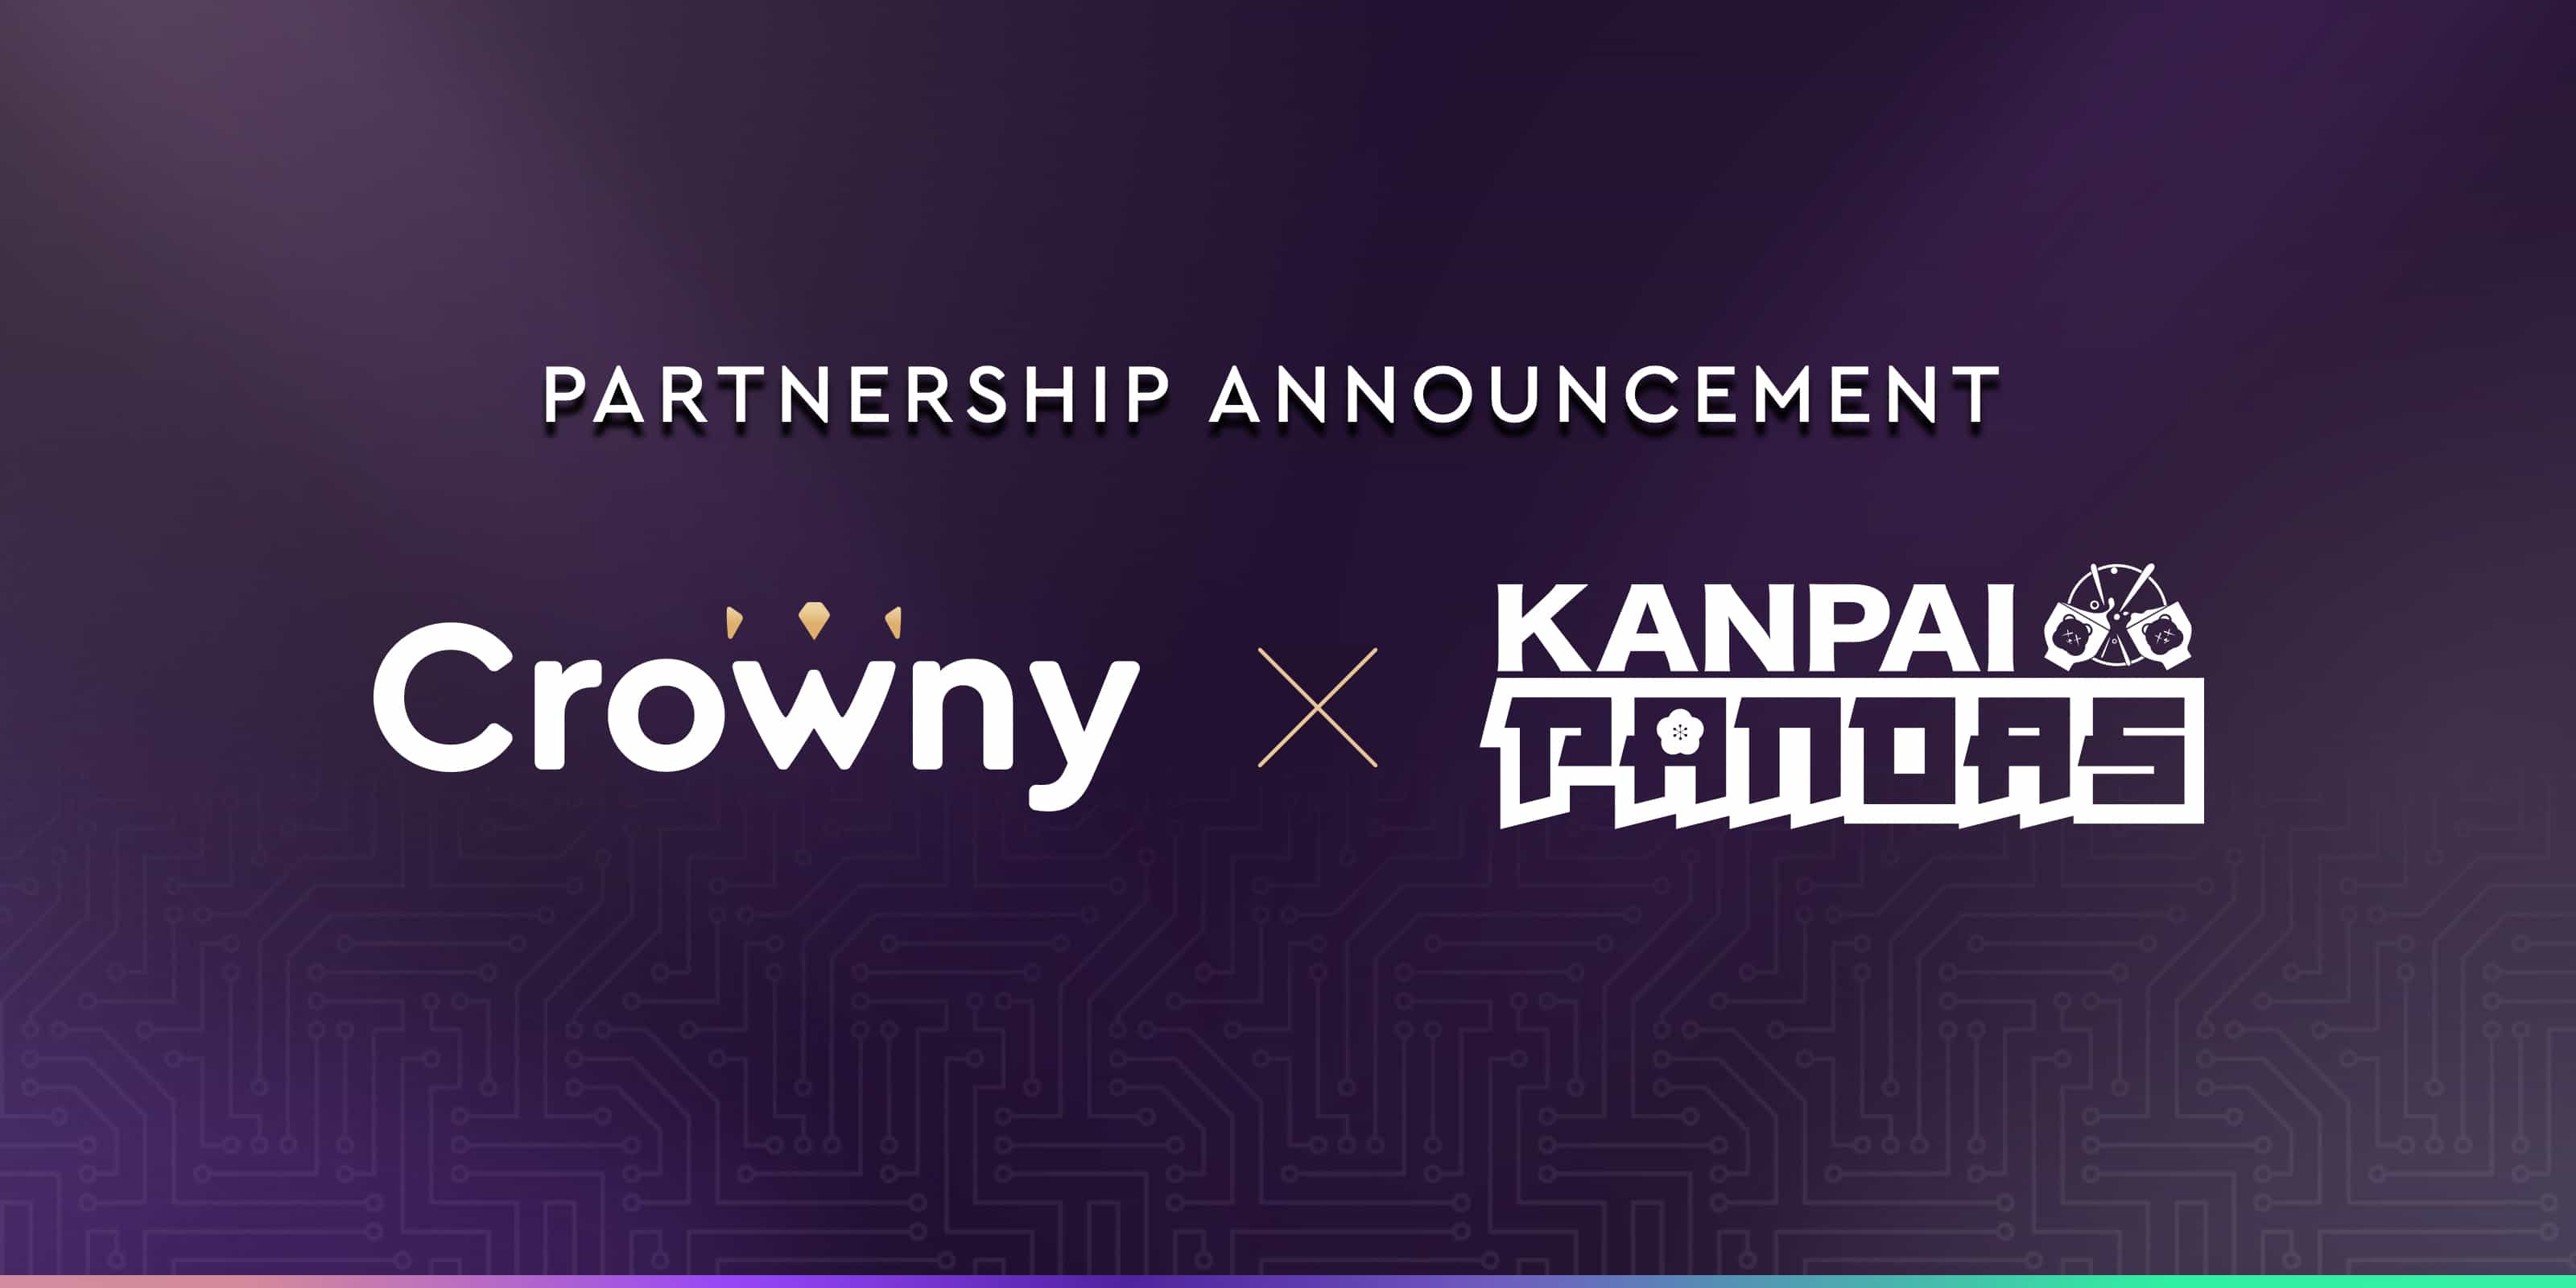 Kanpai Pandas and Crowny partnership announcement